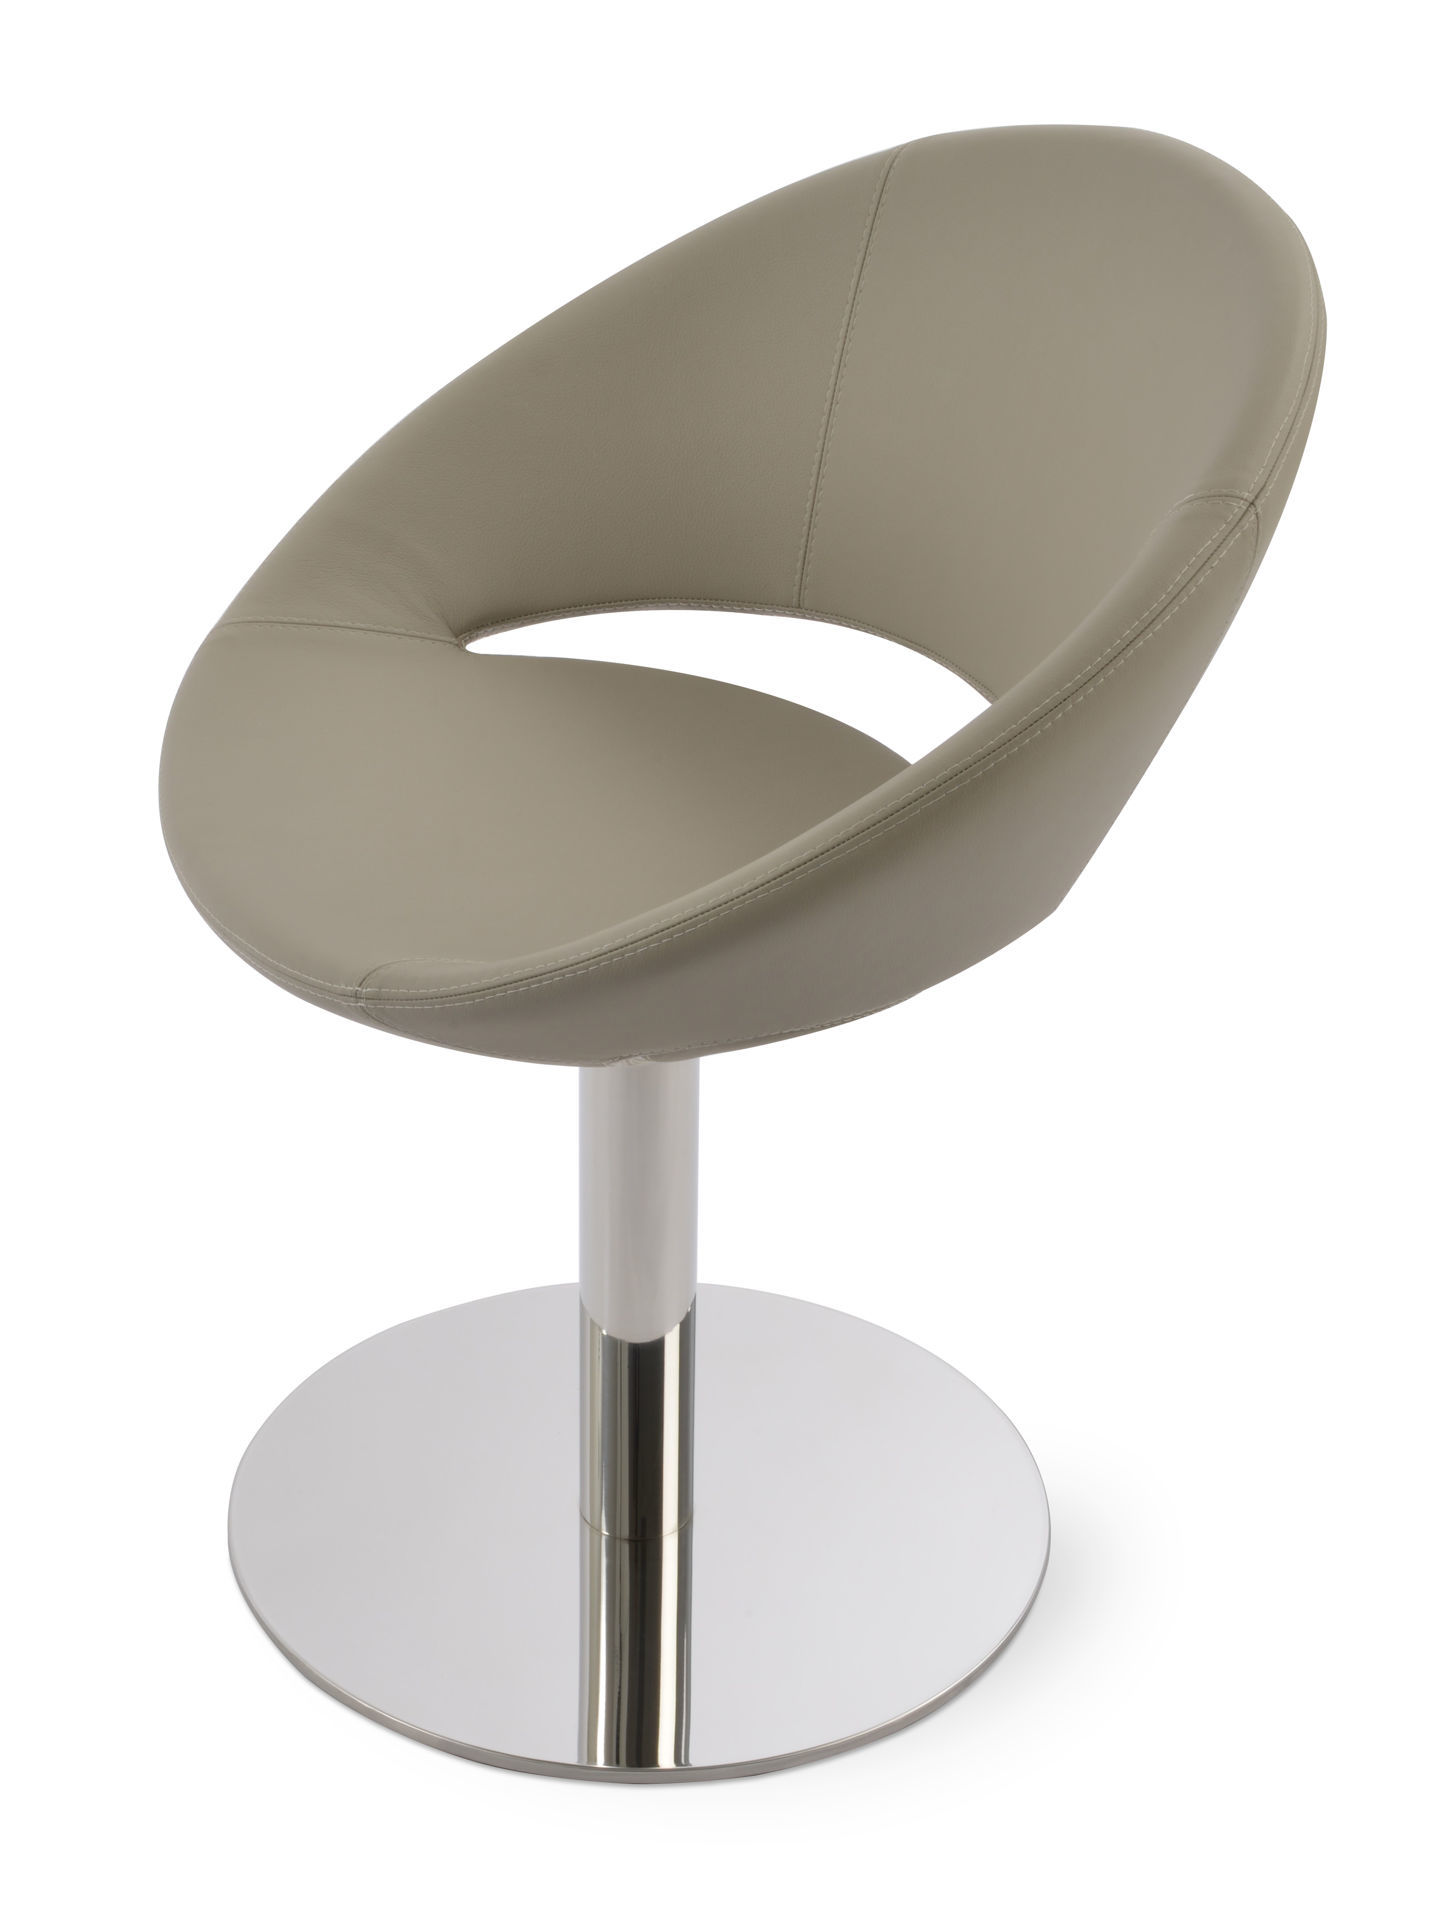 PeraDesign. Crescent Round Swivel Dining Chair